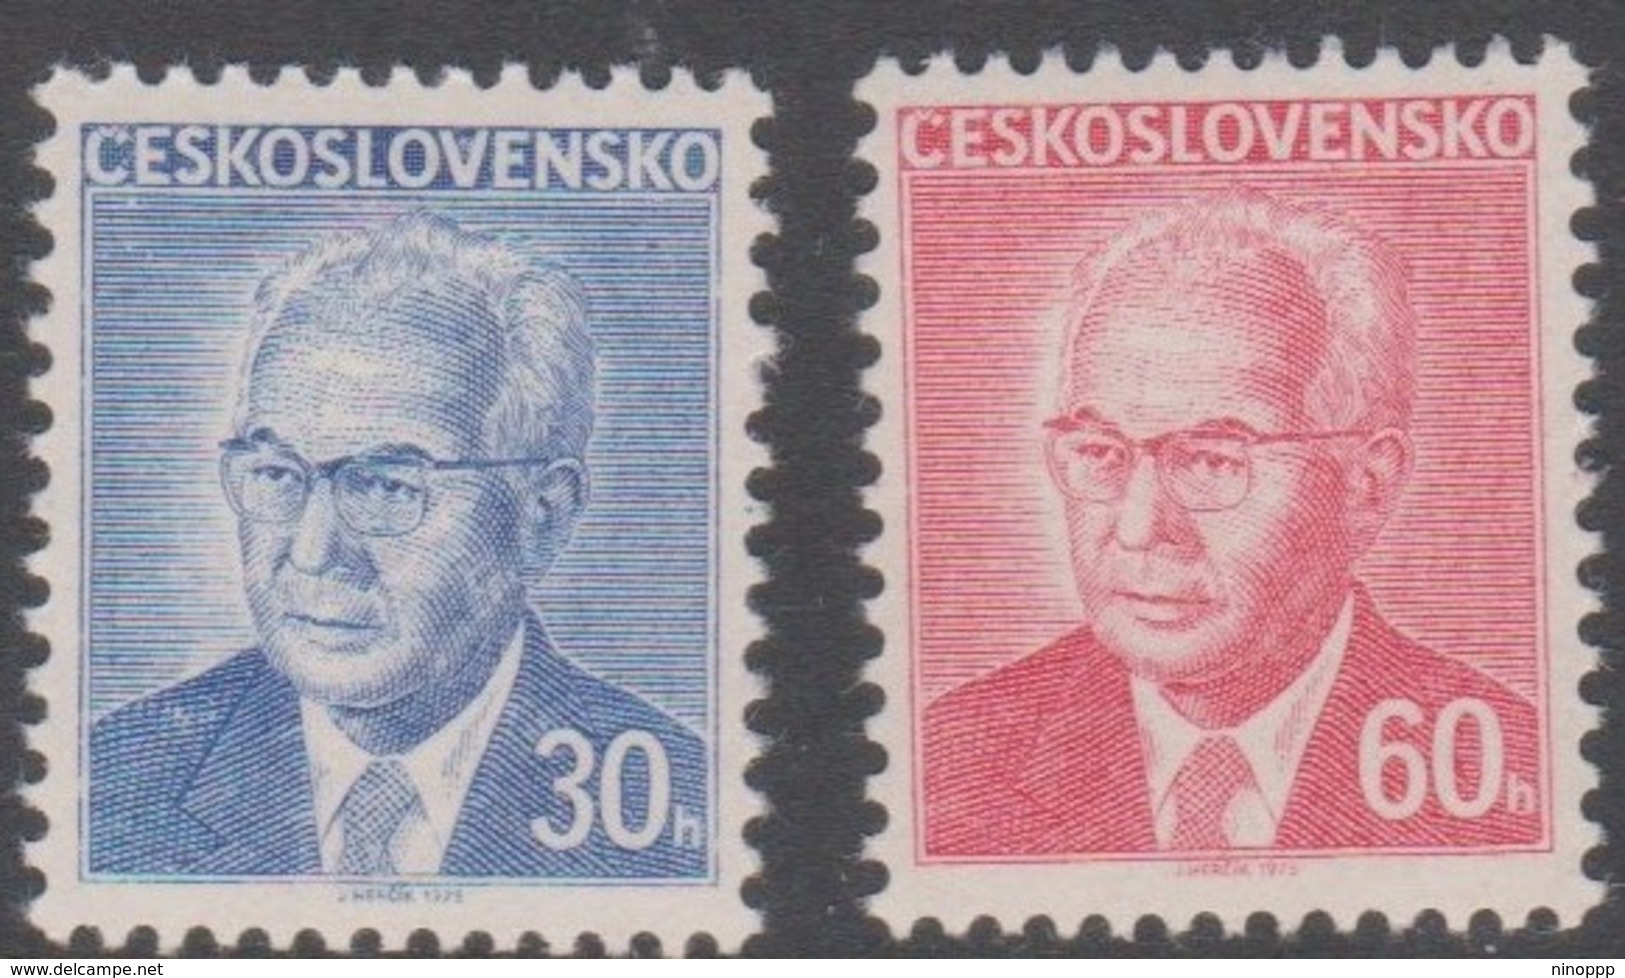 Czechoslovakia Scott 2035-2036 1975 Pres Gustav Husak, Mint Never Hinged - Unused Stamps